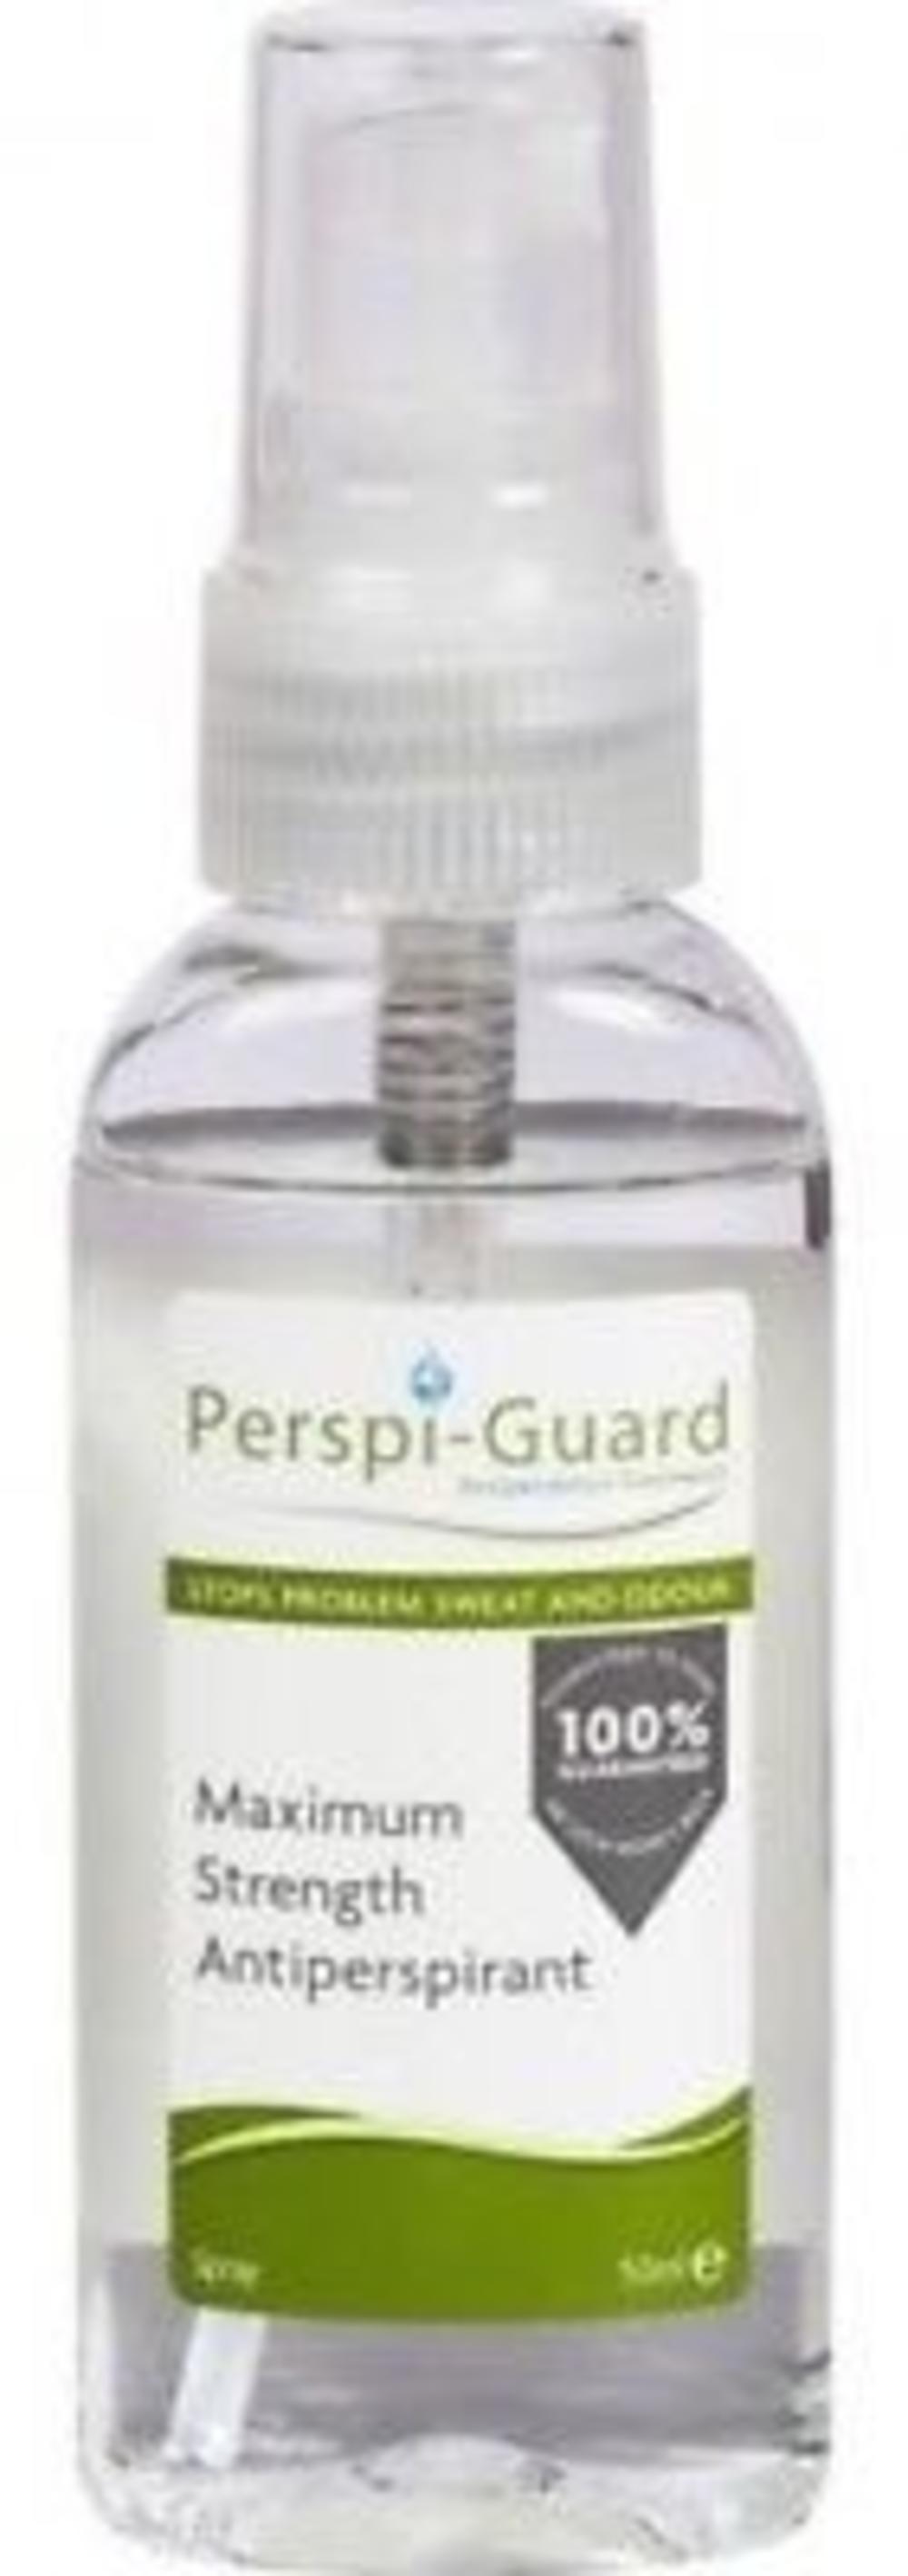 Perspi-Guard sprej nije dnevni dezodorans već medicinski antiperspirant protiv prekomernog znojenja  